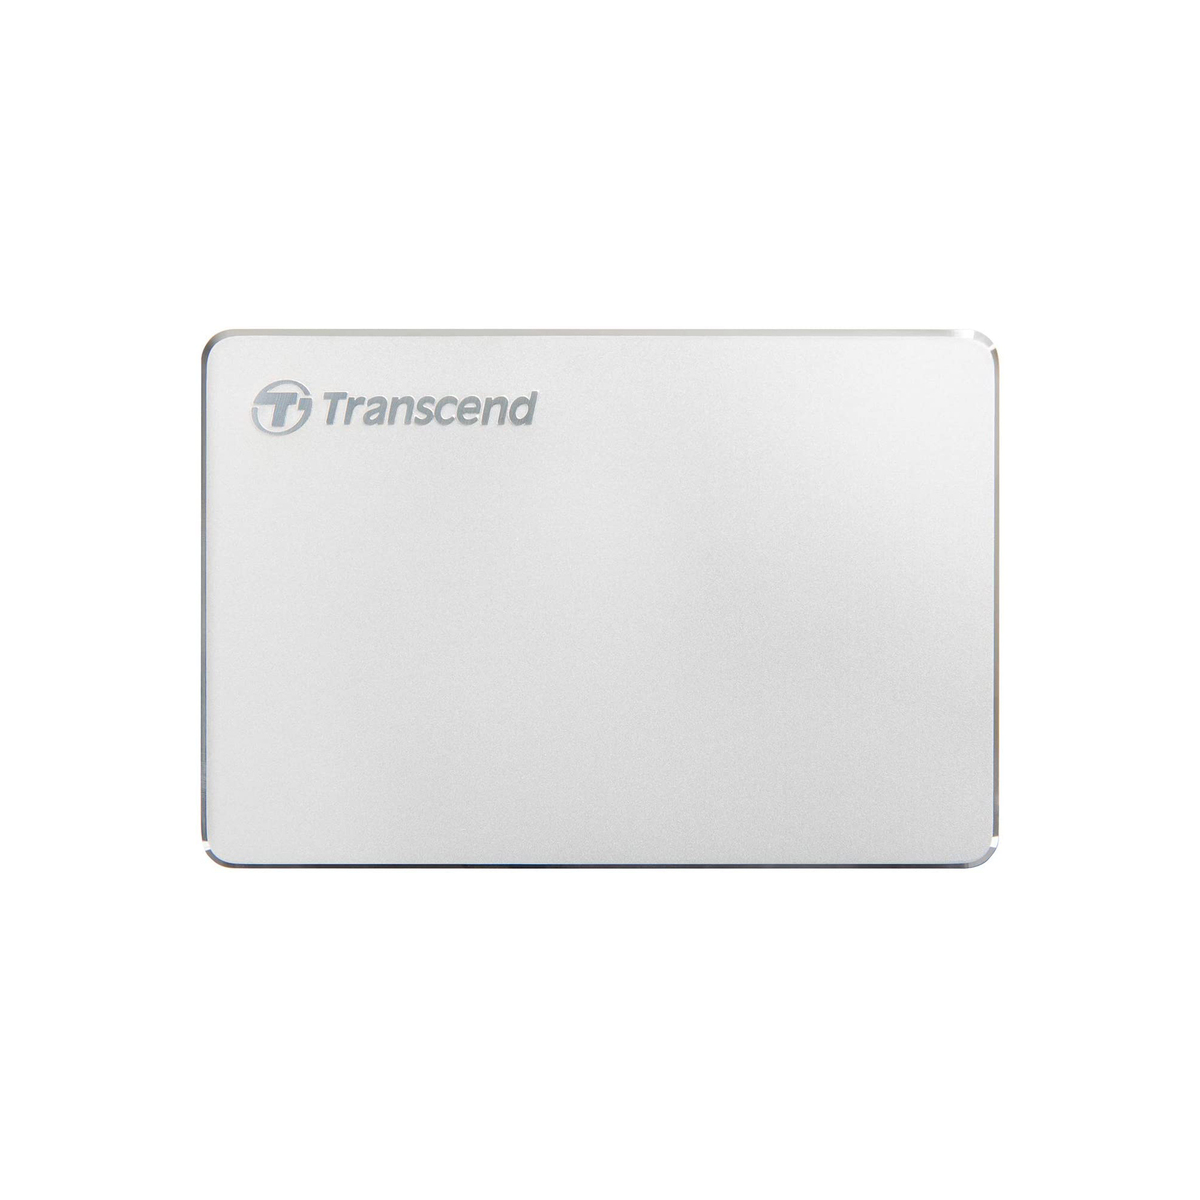 Transcend StoreJet External Hard Drive 2.5" TS1TSJ25C3S 1TB